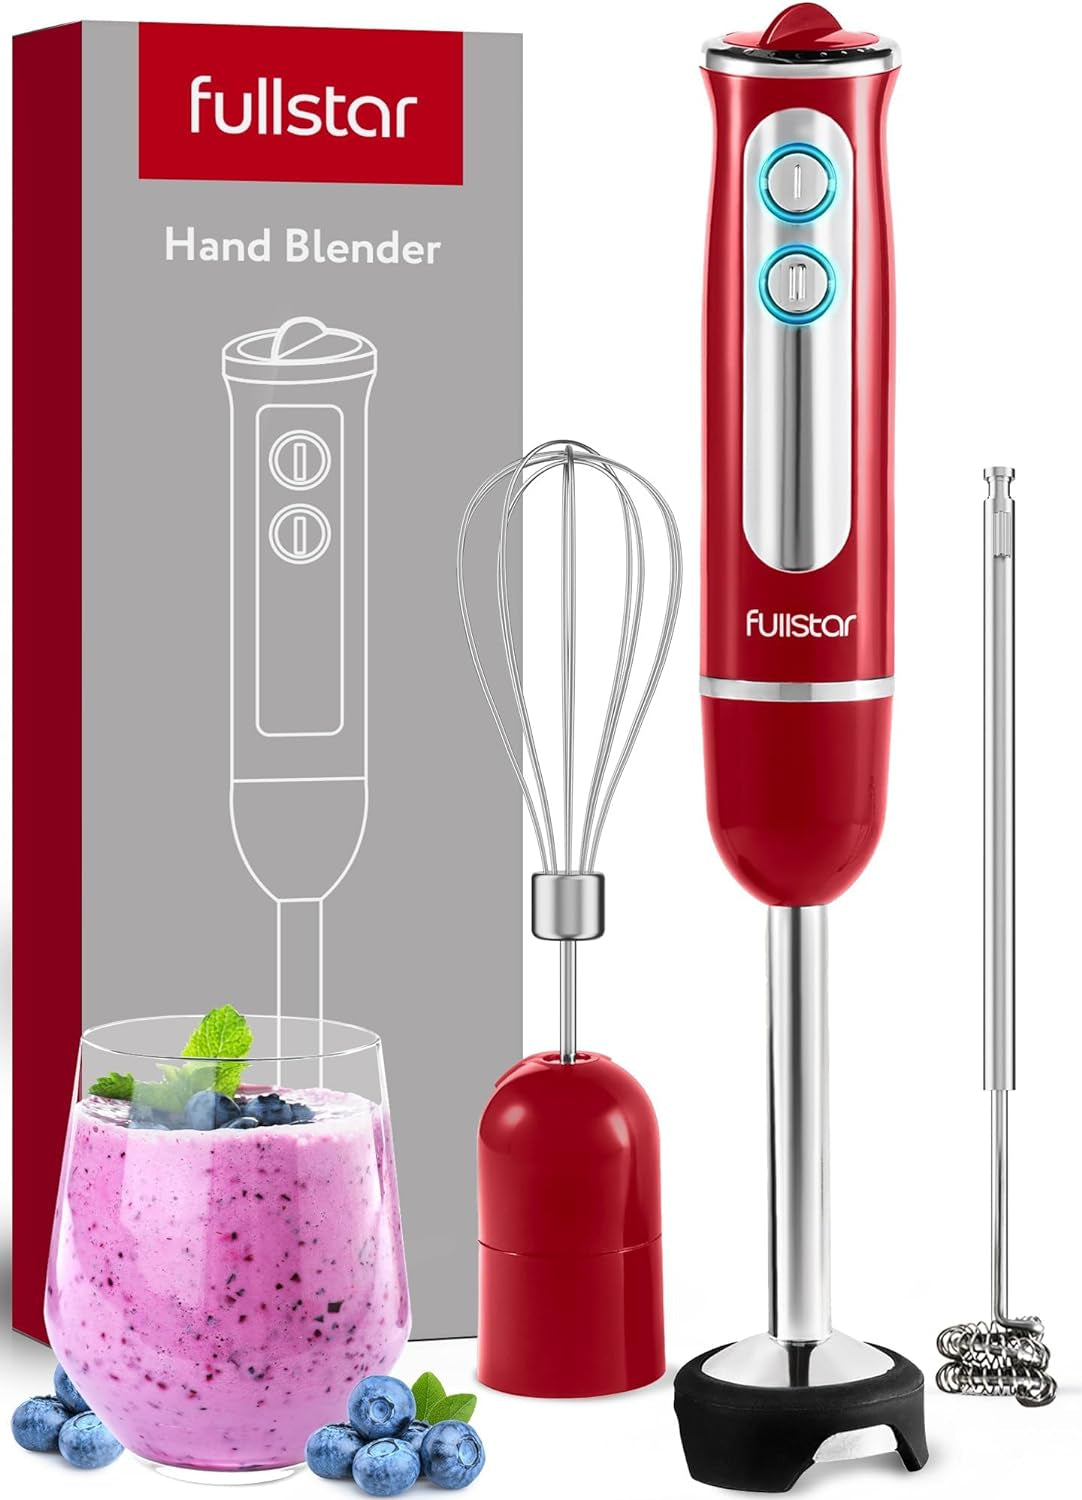 Immersion Blender, Hand Blender Electric, 3-In-1 Immersion Blender Handheld, 9-Speed, 500W Handheld Blender - Hand Blenders Immersion, Hand Mixer Electric Blenders for Kitchen, Smoothie Blender  fullstar Red 3-In-1 